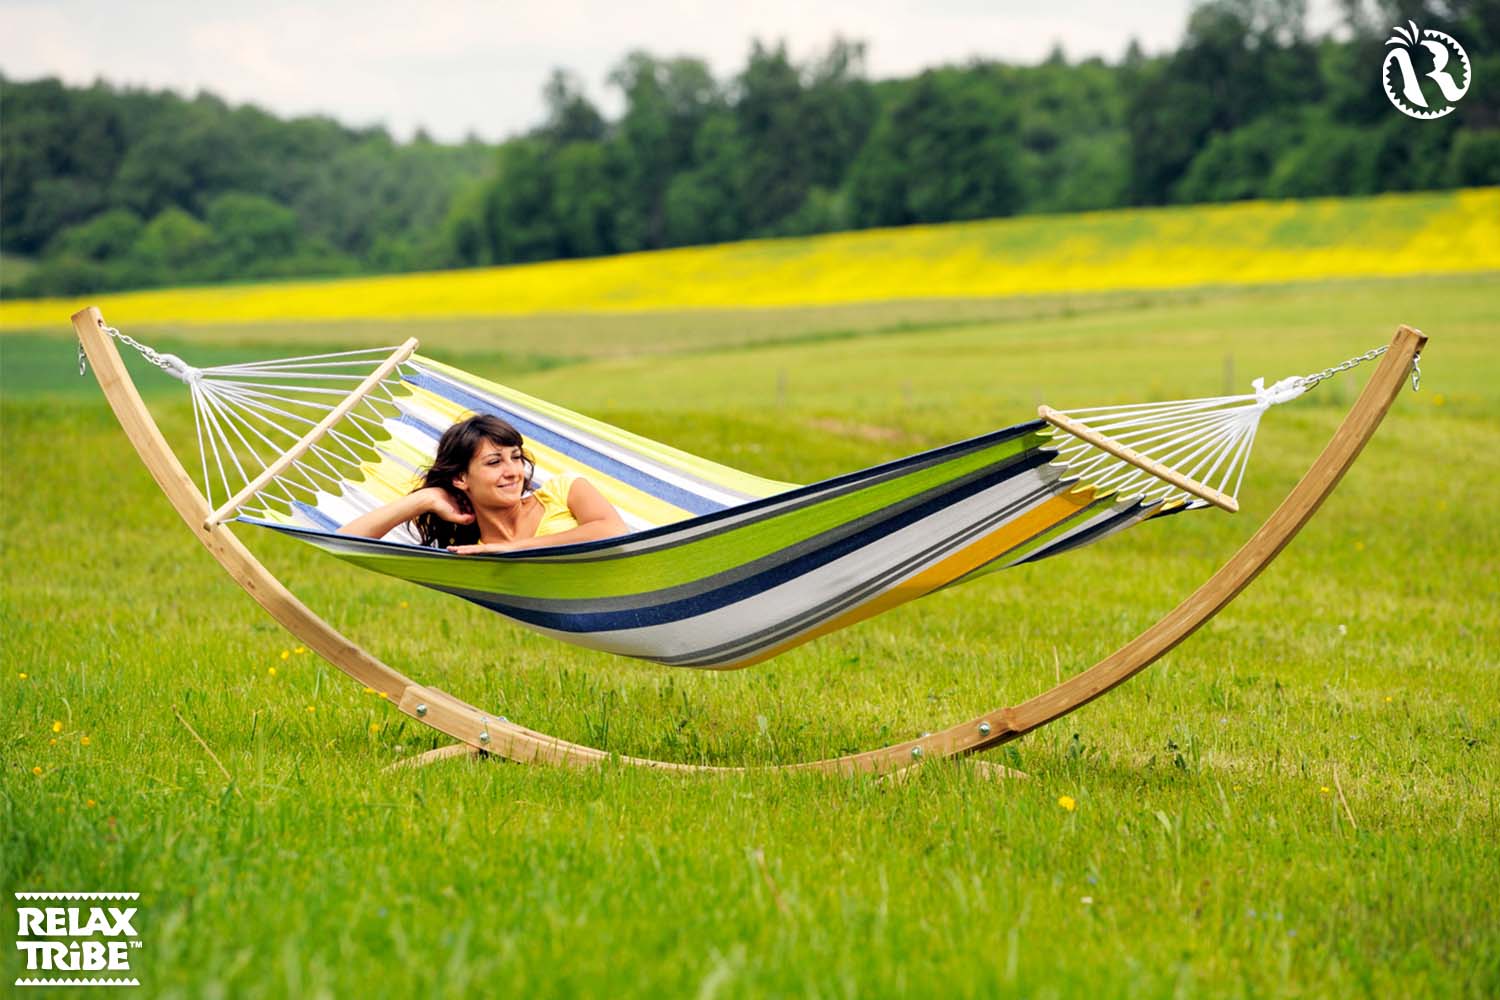 tonga-kolibri-single-weatherproof-hammock-with-bars-multicolor-yellow-outdoor-wood-stand